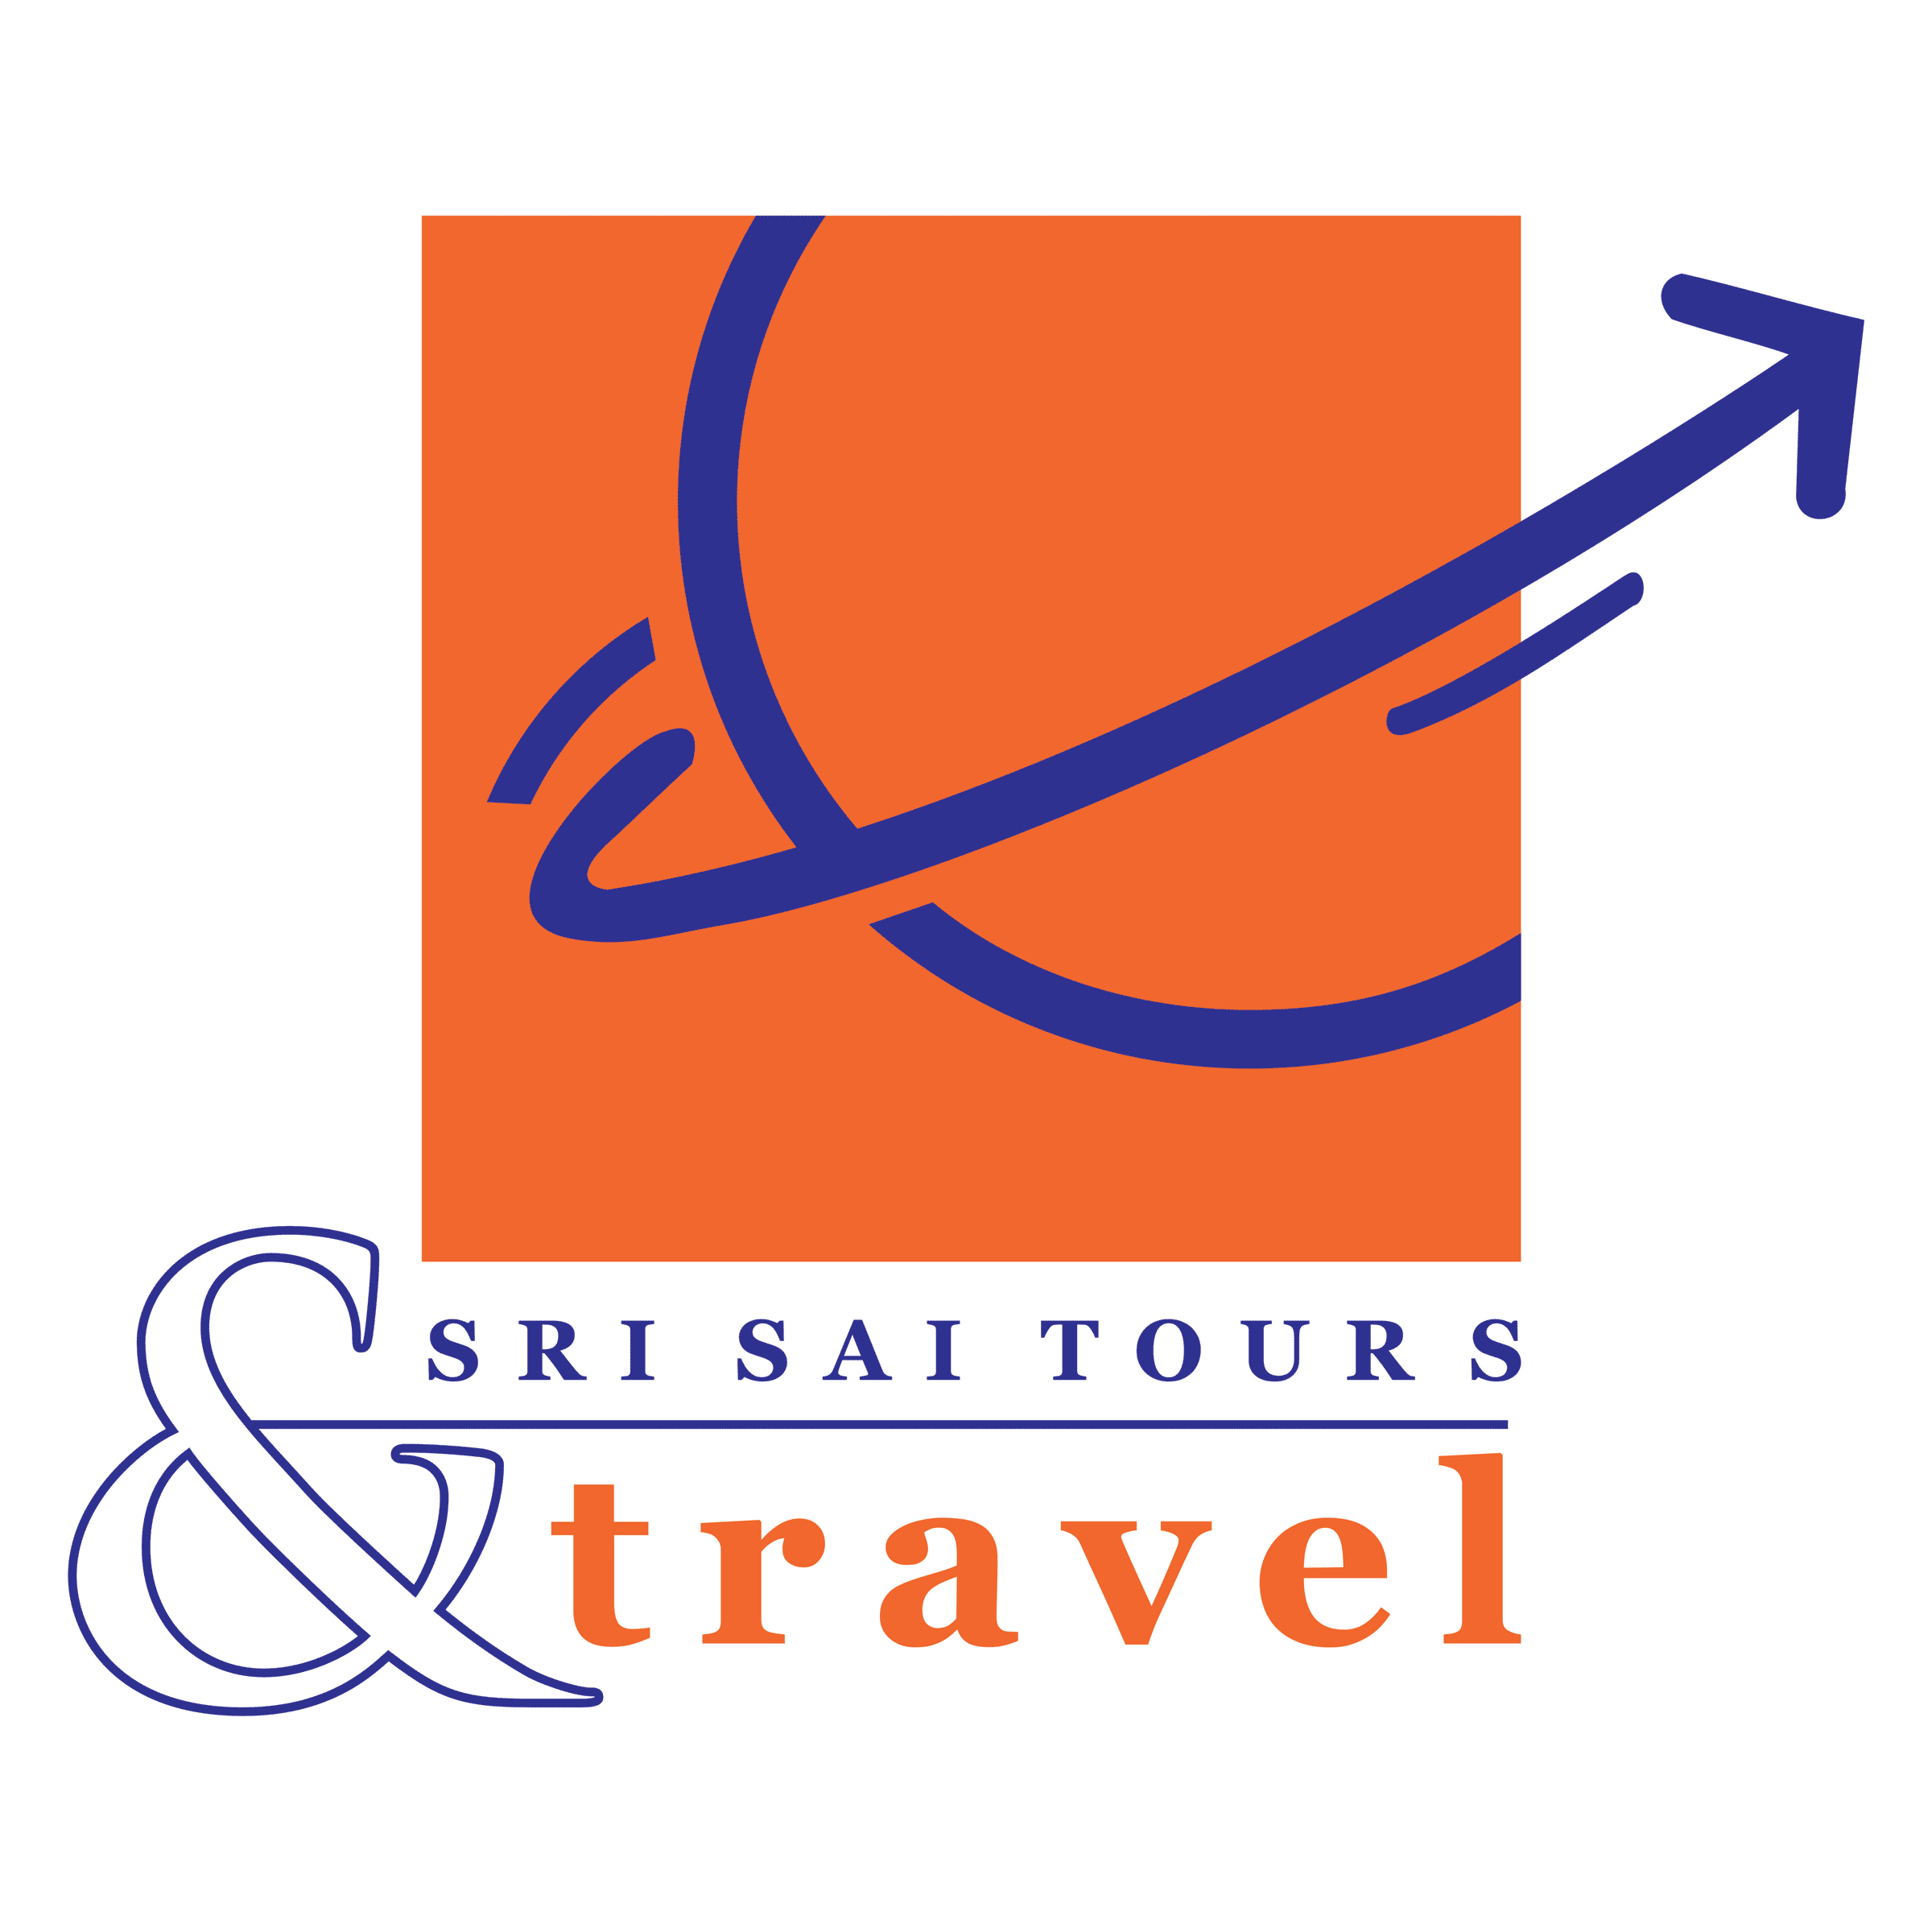 sai tours travels lucknow